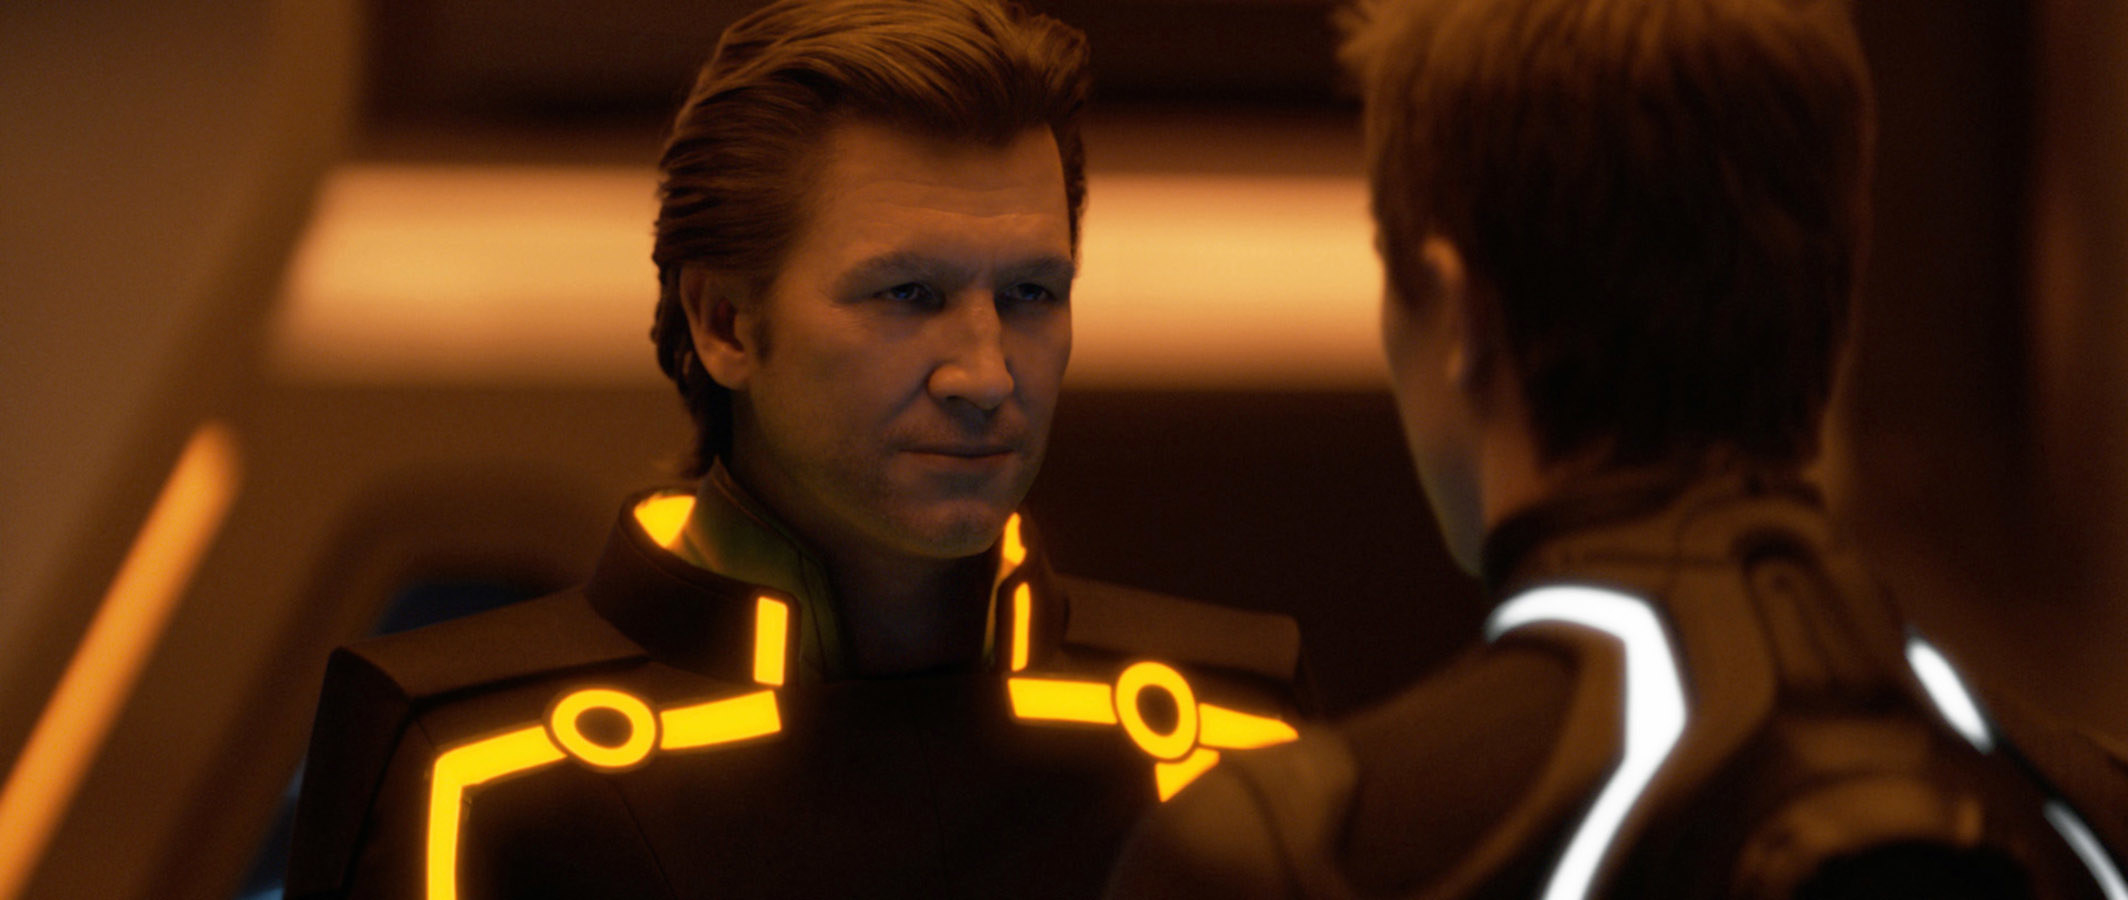 Jeff Bridges, Garrett Hedlund having a serious talk wearing futuristic suits with lights